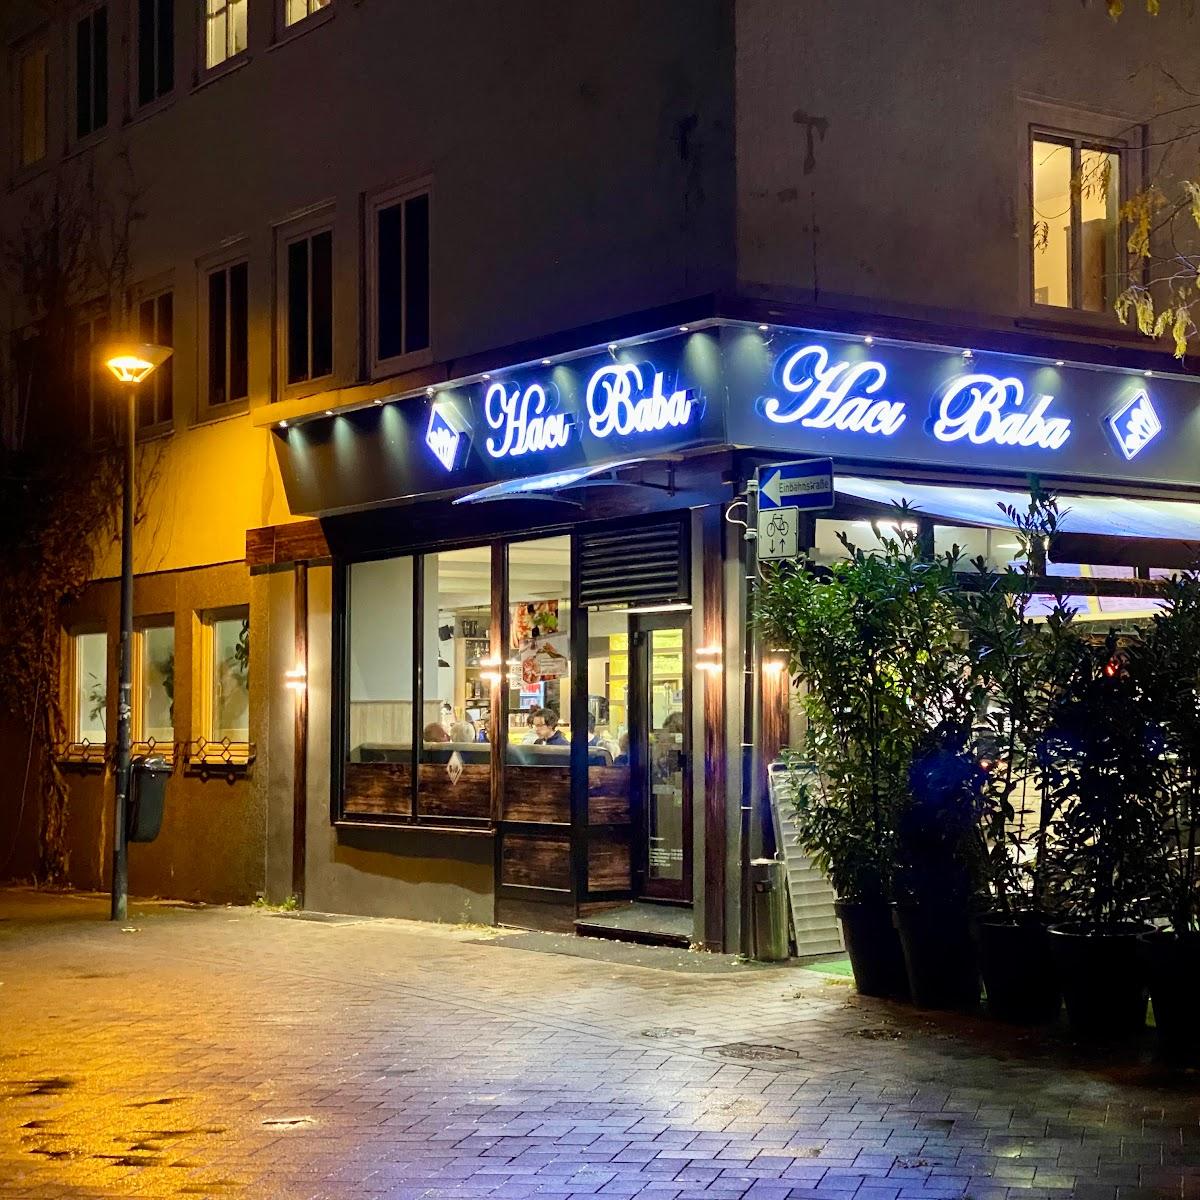 Restaurant "Restaurant Haci Baba" in Paderborn